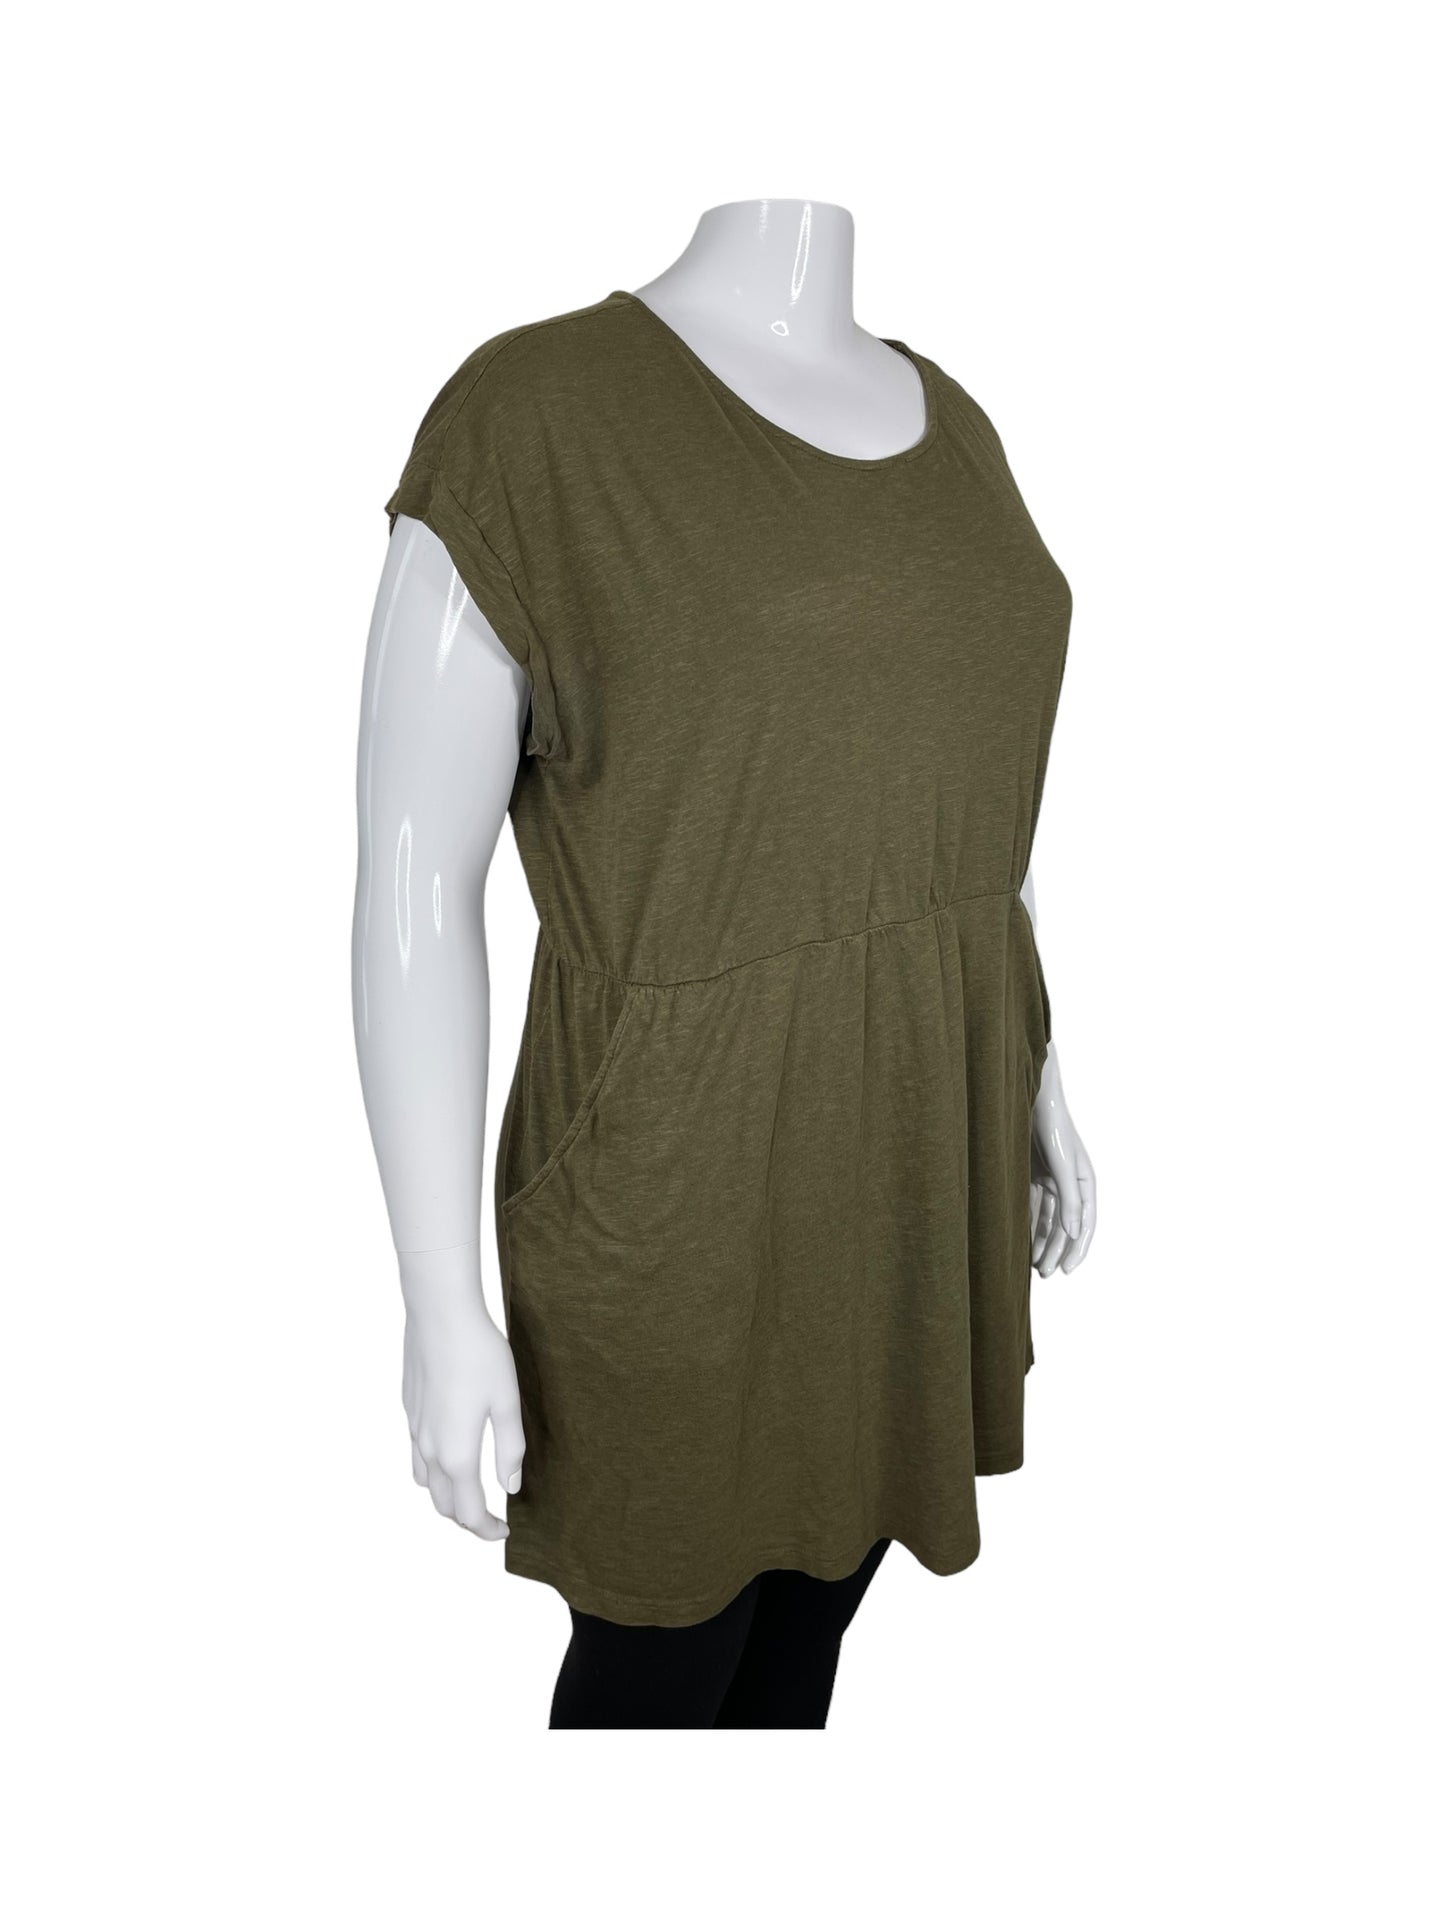 Olive Green Short Sleeve T-shirt Dress w/ Pockets (L)